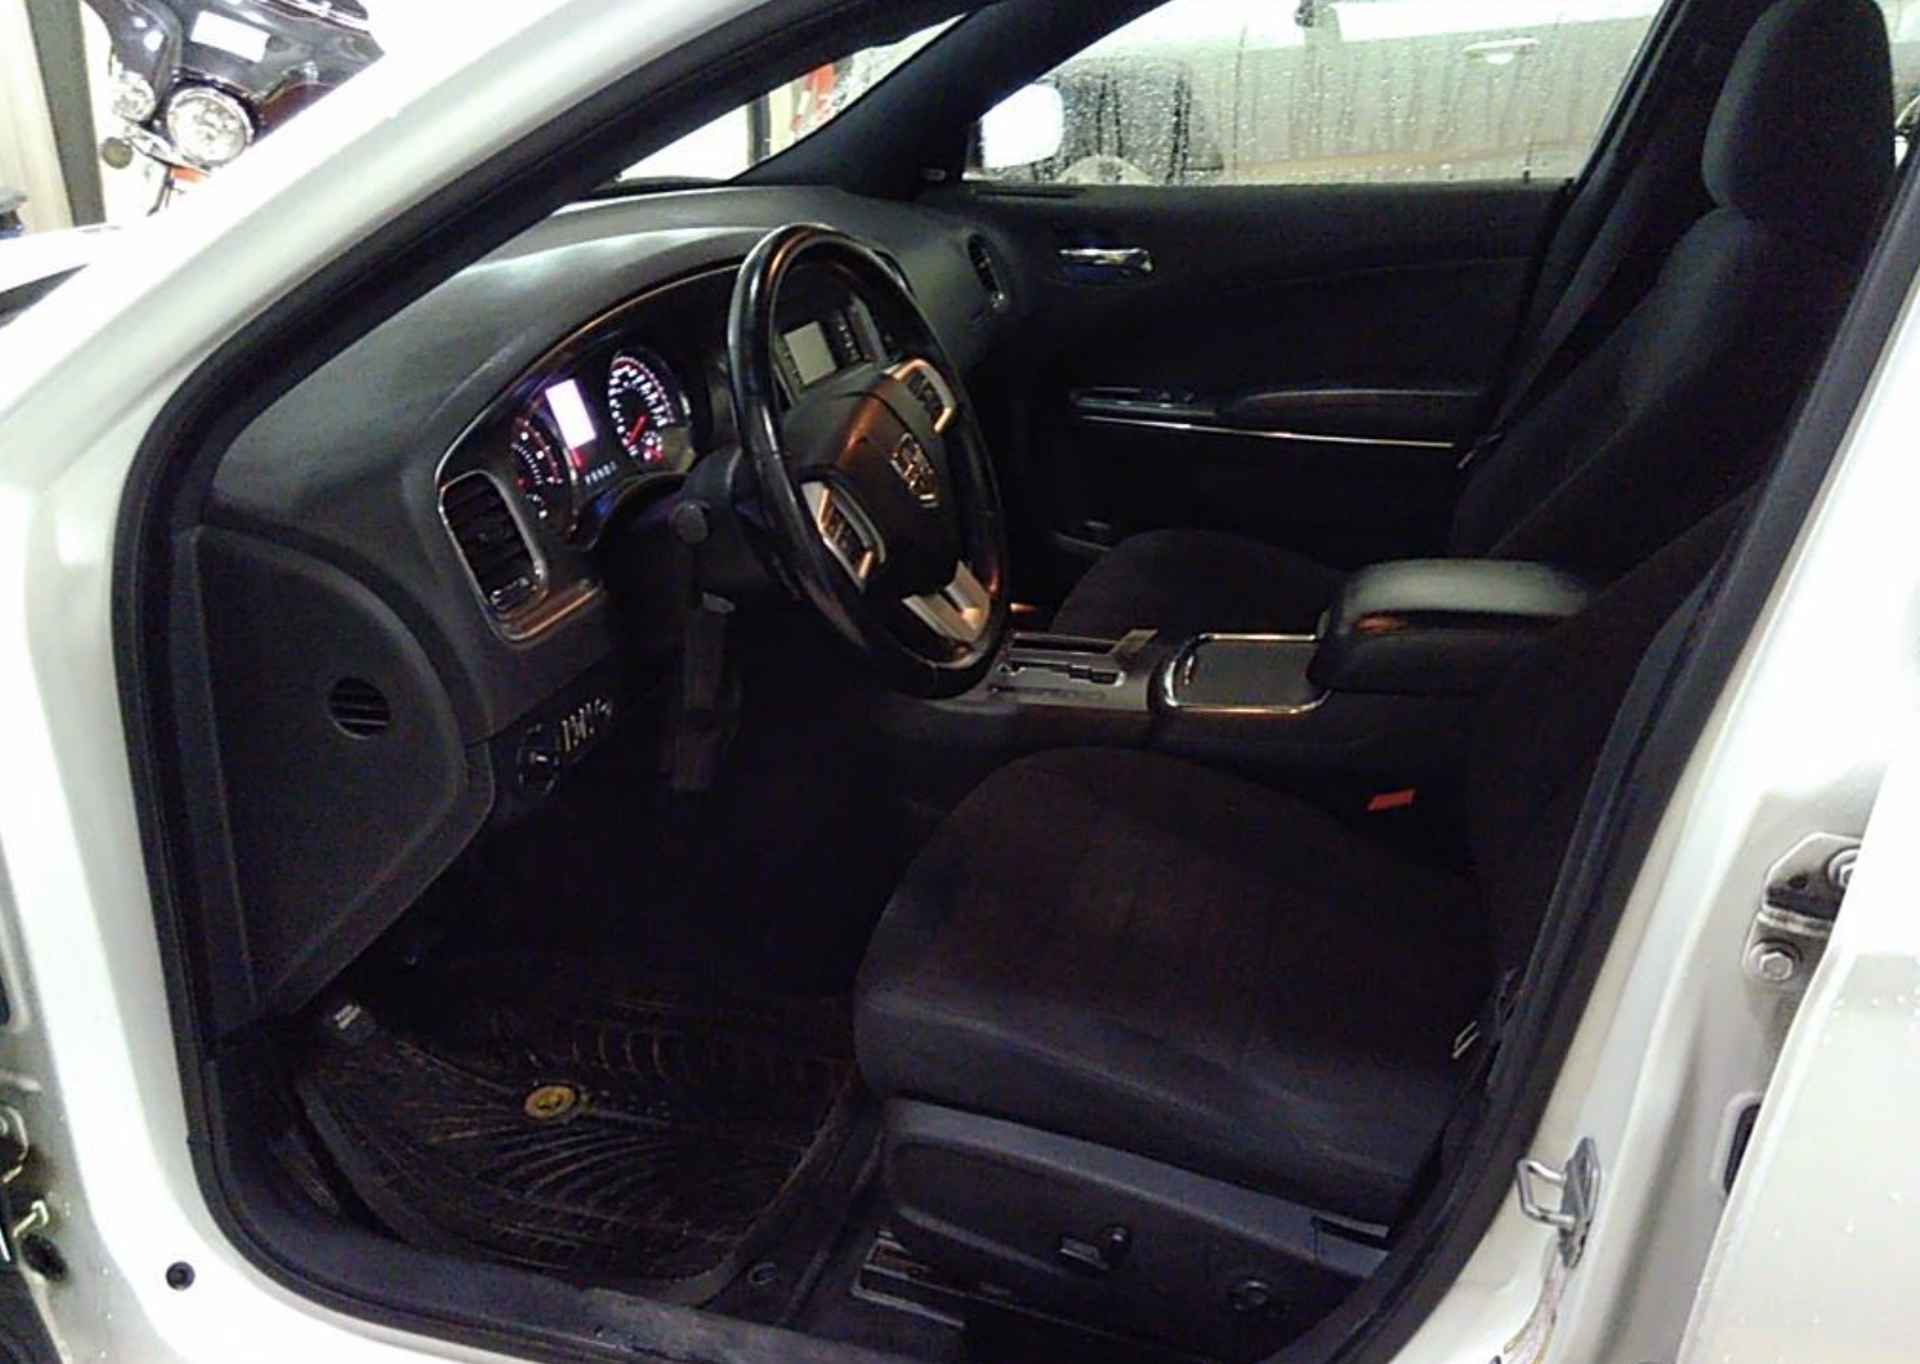 ** ON SALE ** Dodge Charger 3.6L V6 SXT LTD RWD Automatic 2011 '11 Year' A/C - ULEZ Compliant - Image 5 of 5